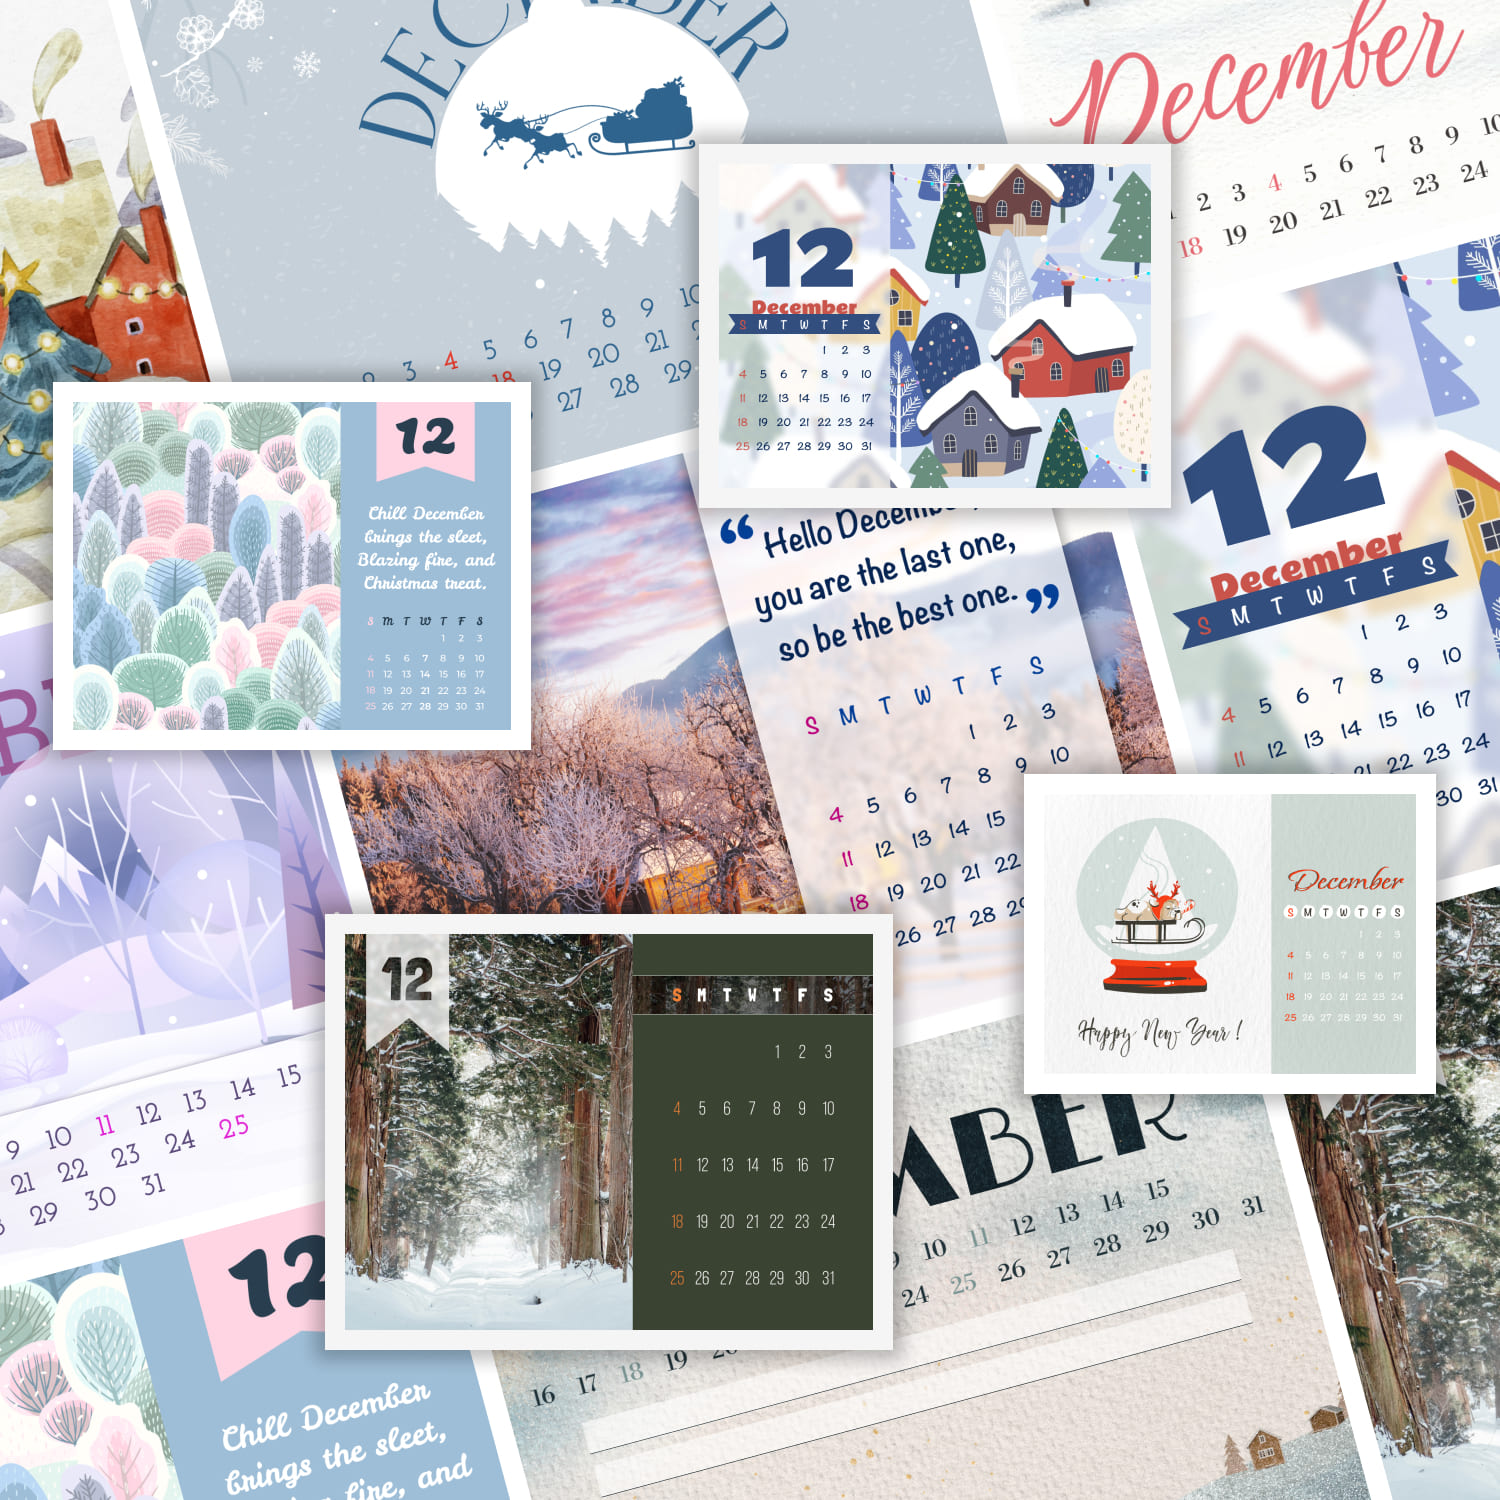 10 Free Editable December Calendars Cover.